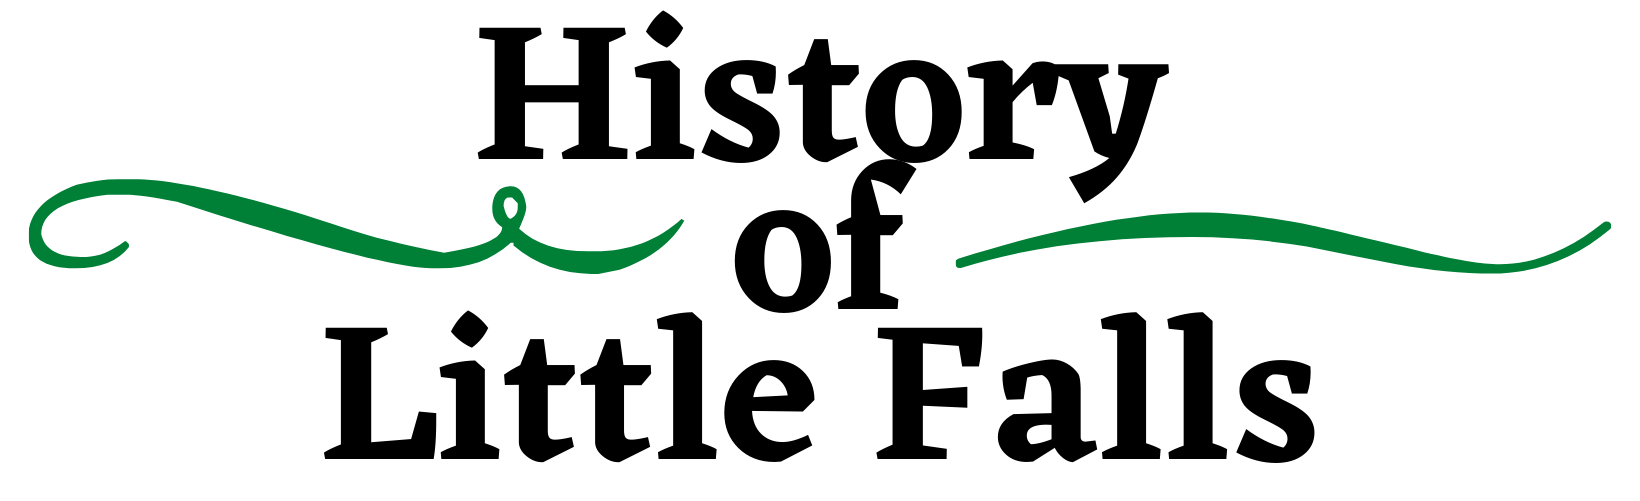 History of Little Falls banner